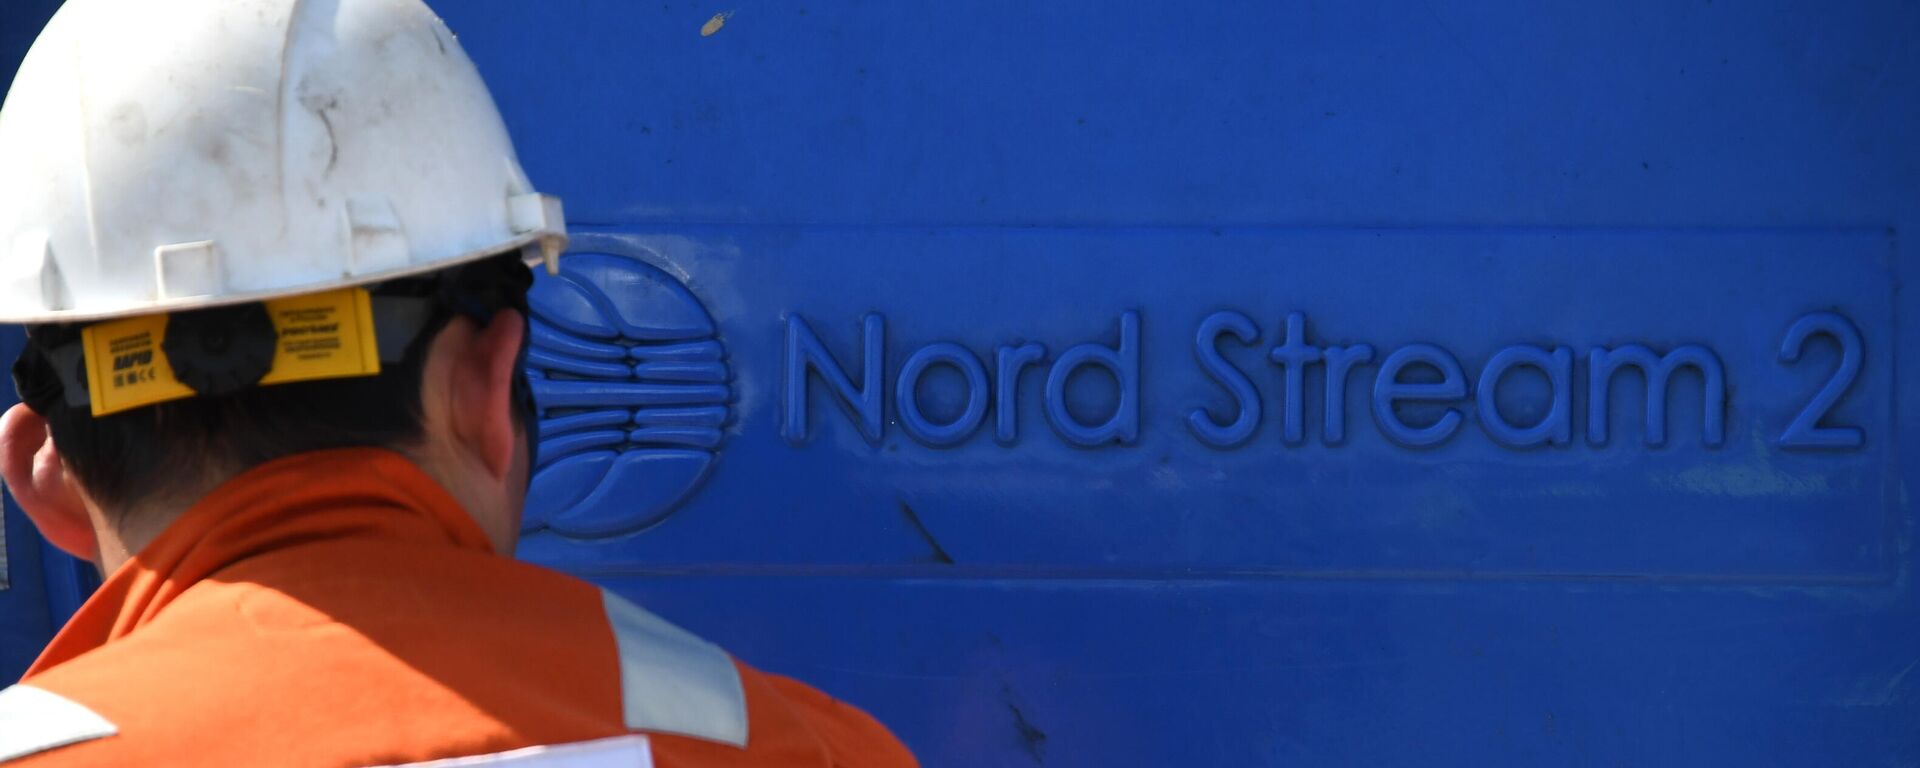 El Nord Stream 2 - Sputnik Mundo, 1920, 04.10.2022